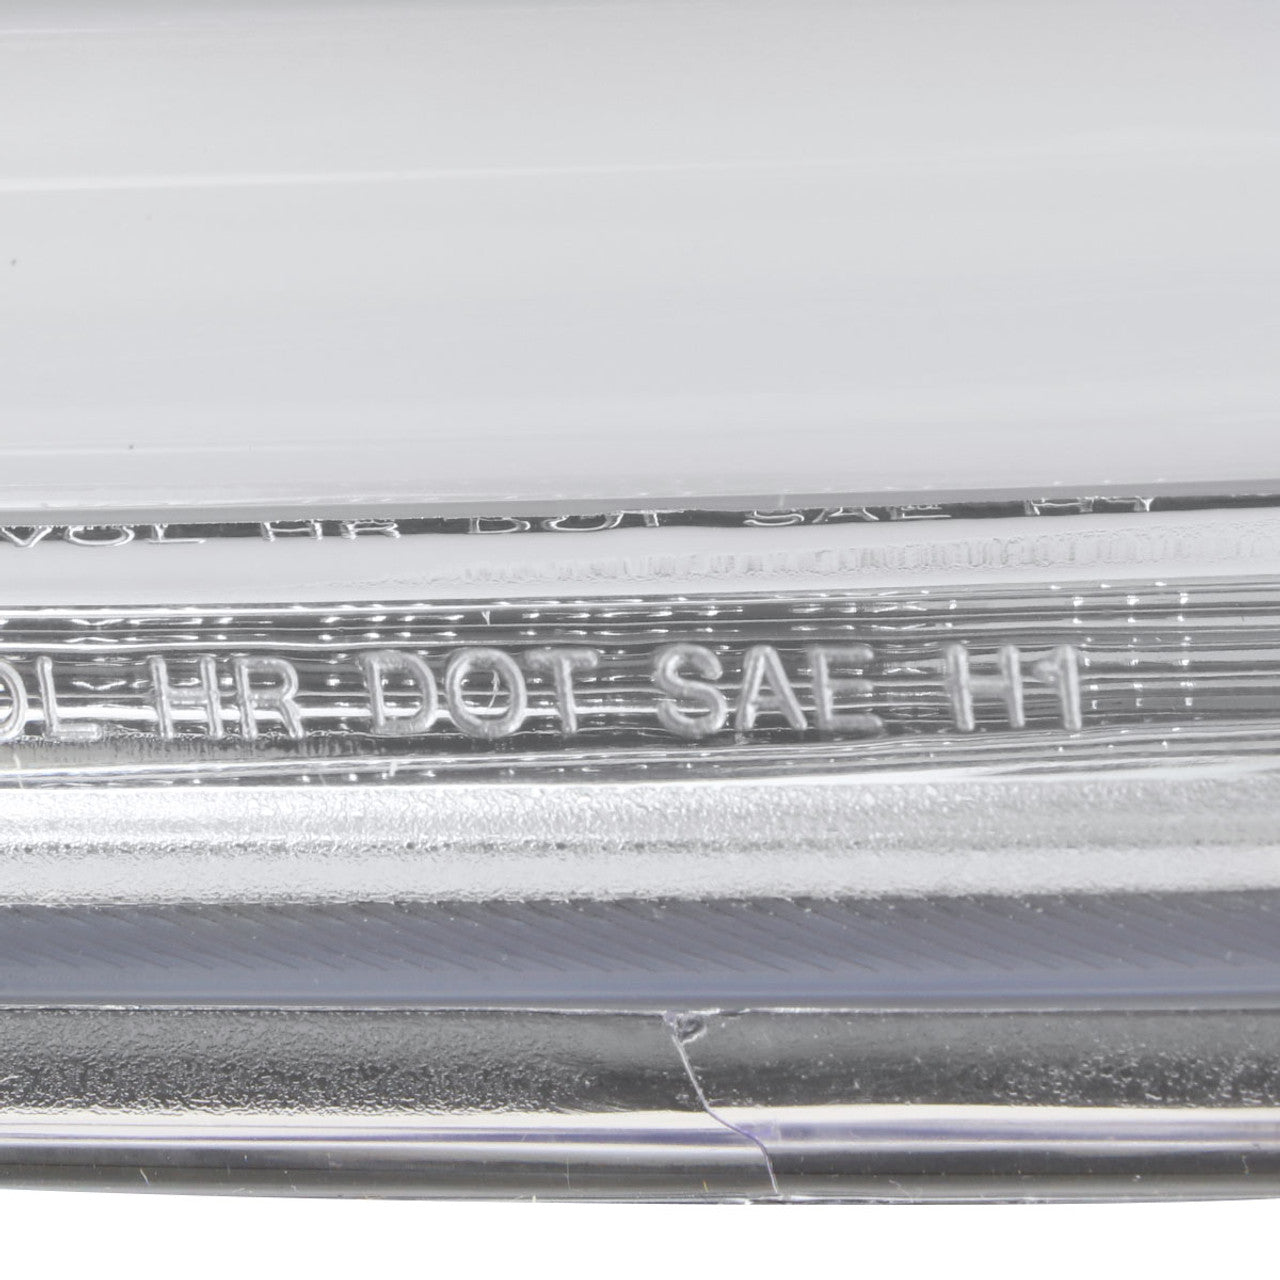 2006-2008 Dodge RAM 1500/ 2006-2009 2500 3500 Switchback LED C-Bar Projector Headlights (Chrome Housing/Clear Lens)